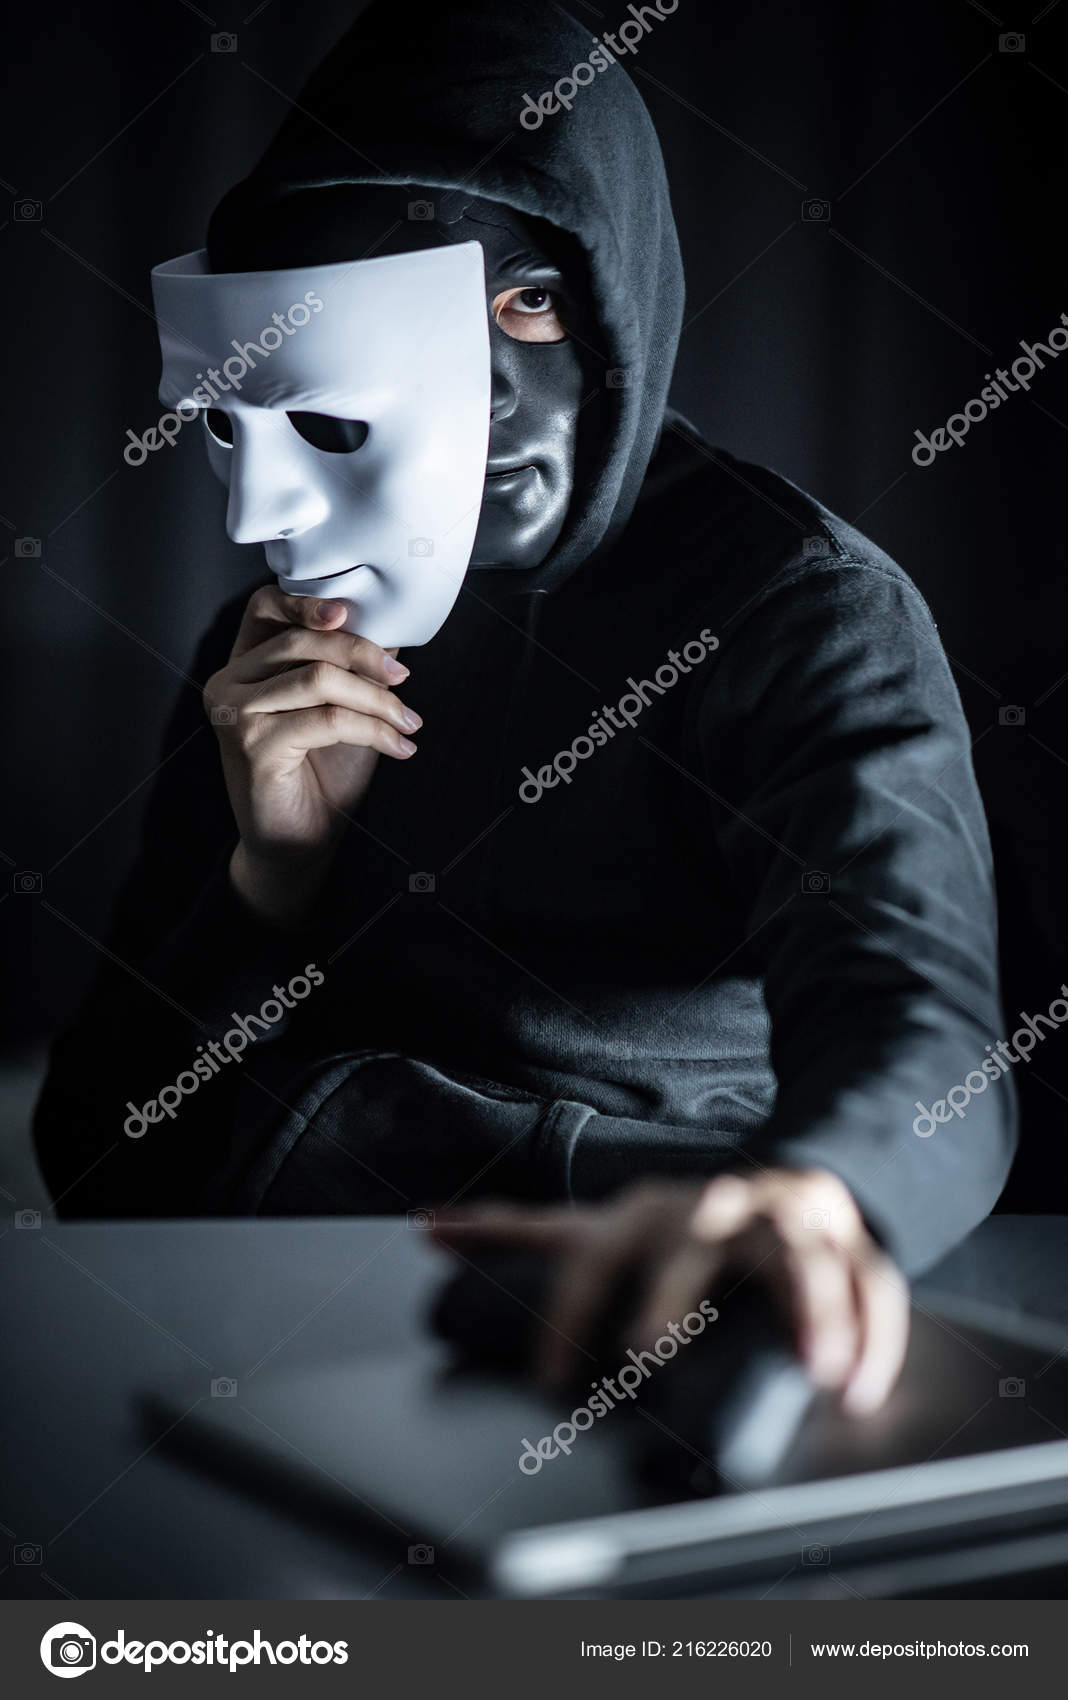 Mystery Man in Black Mask Holding White Masks Stock Image - Image